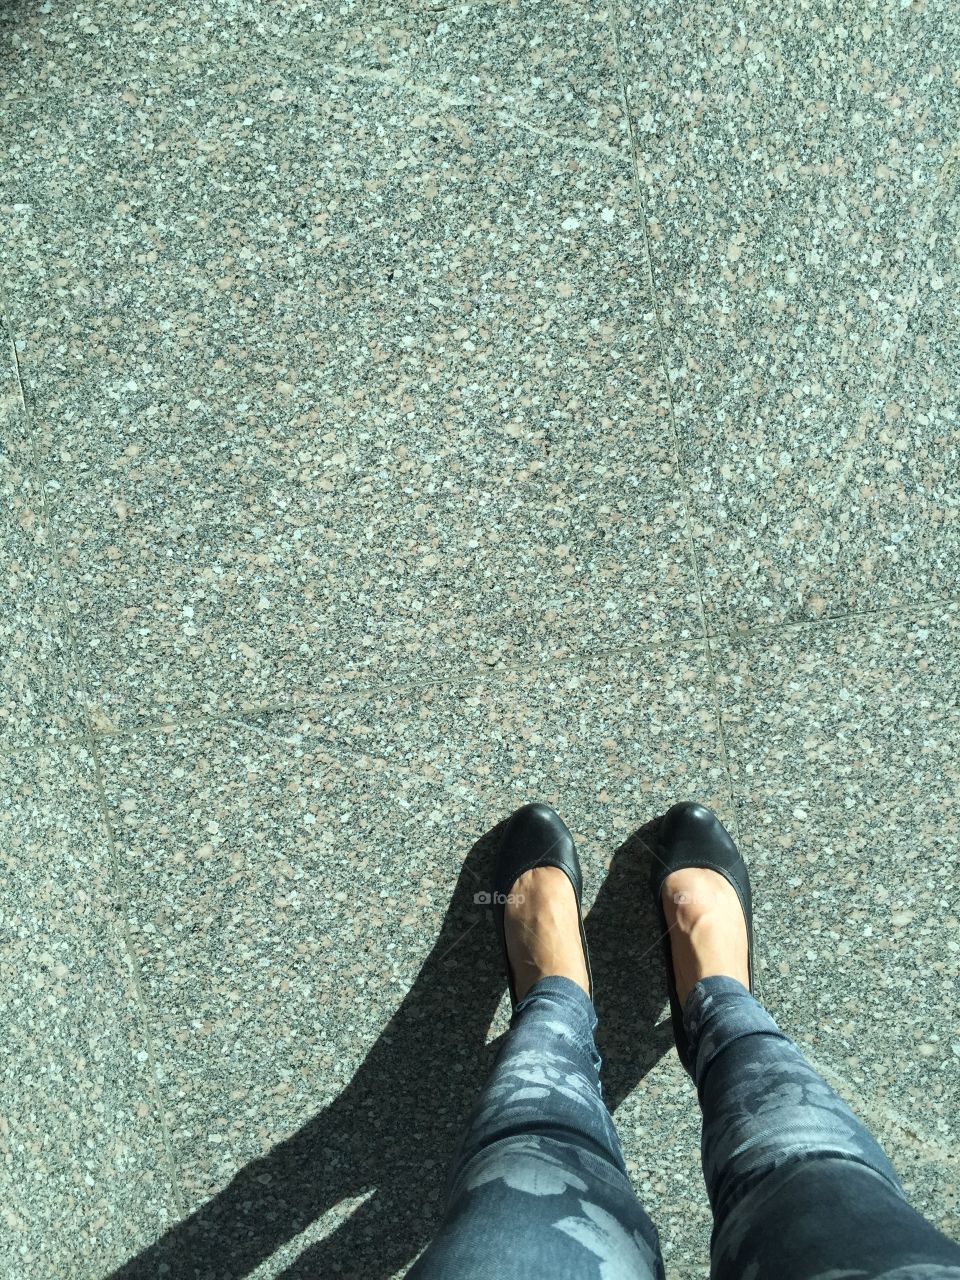 Footwear - Woman's feet from above